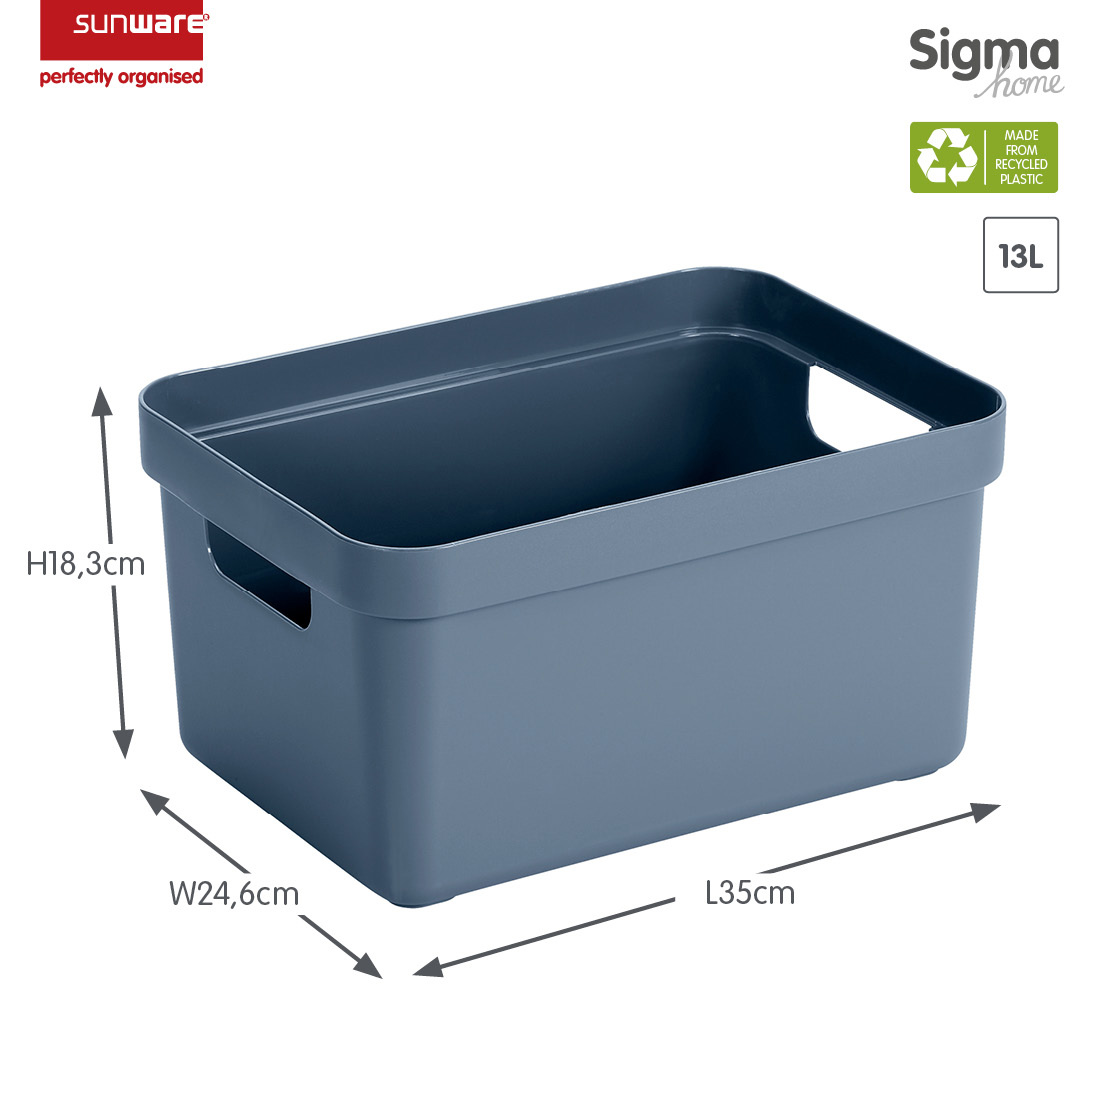 Sigma home storage box 13L dark blue